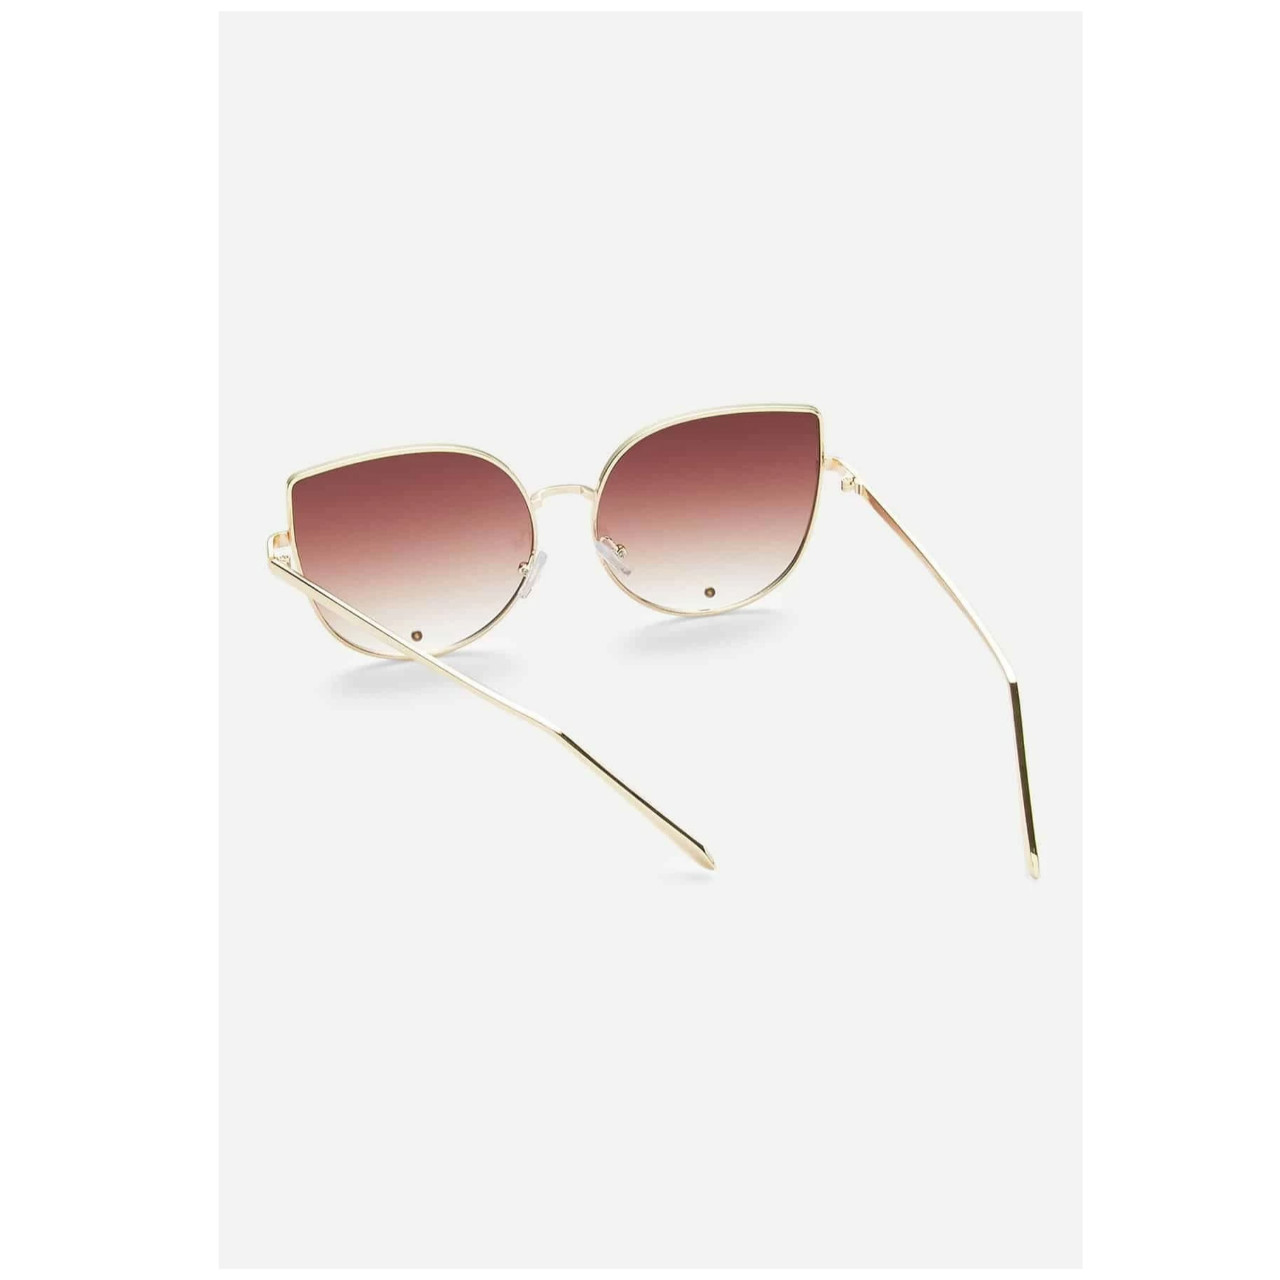 Gold frame brown cat eye stylish sunglasses